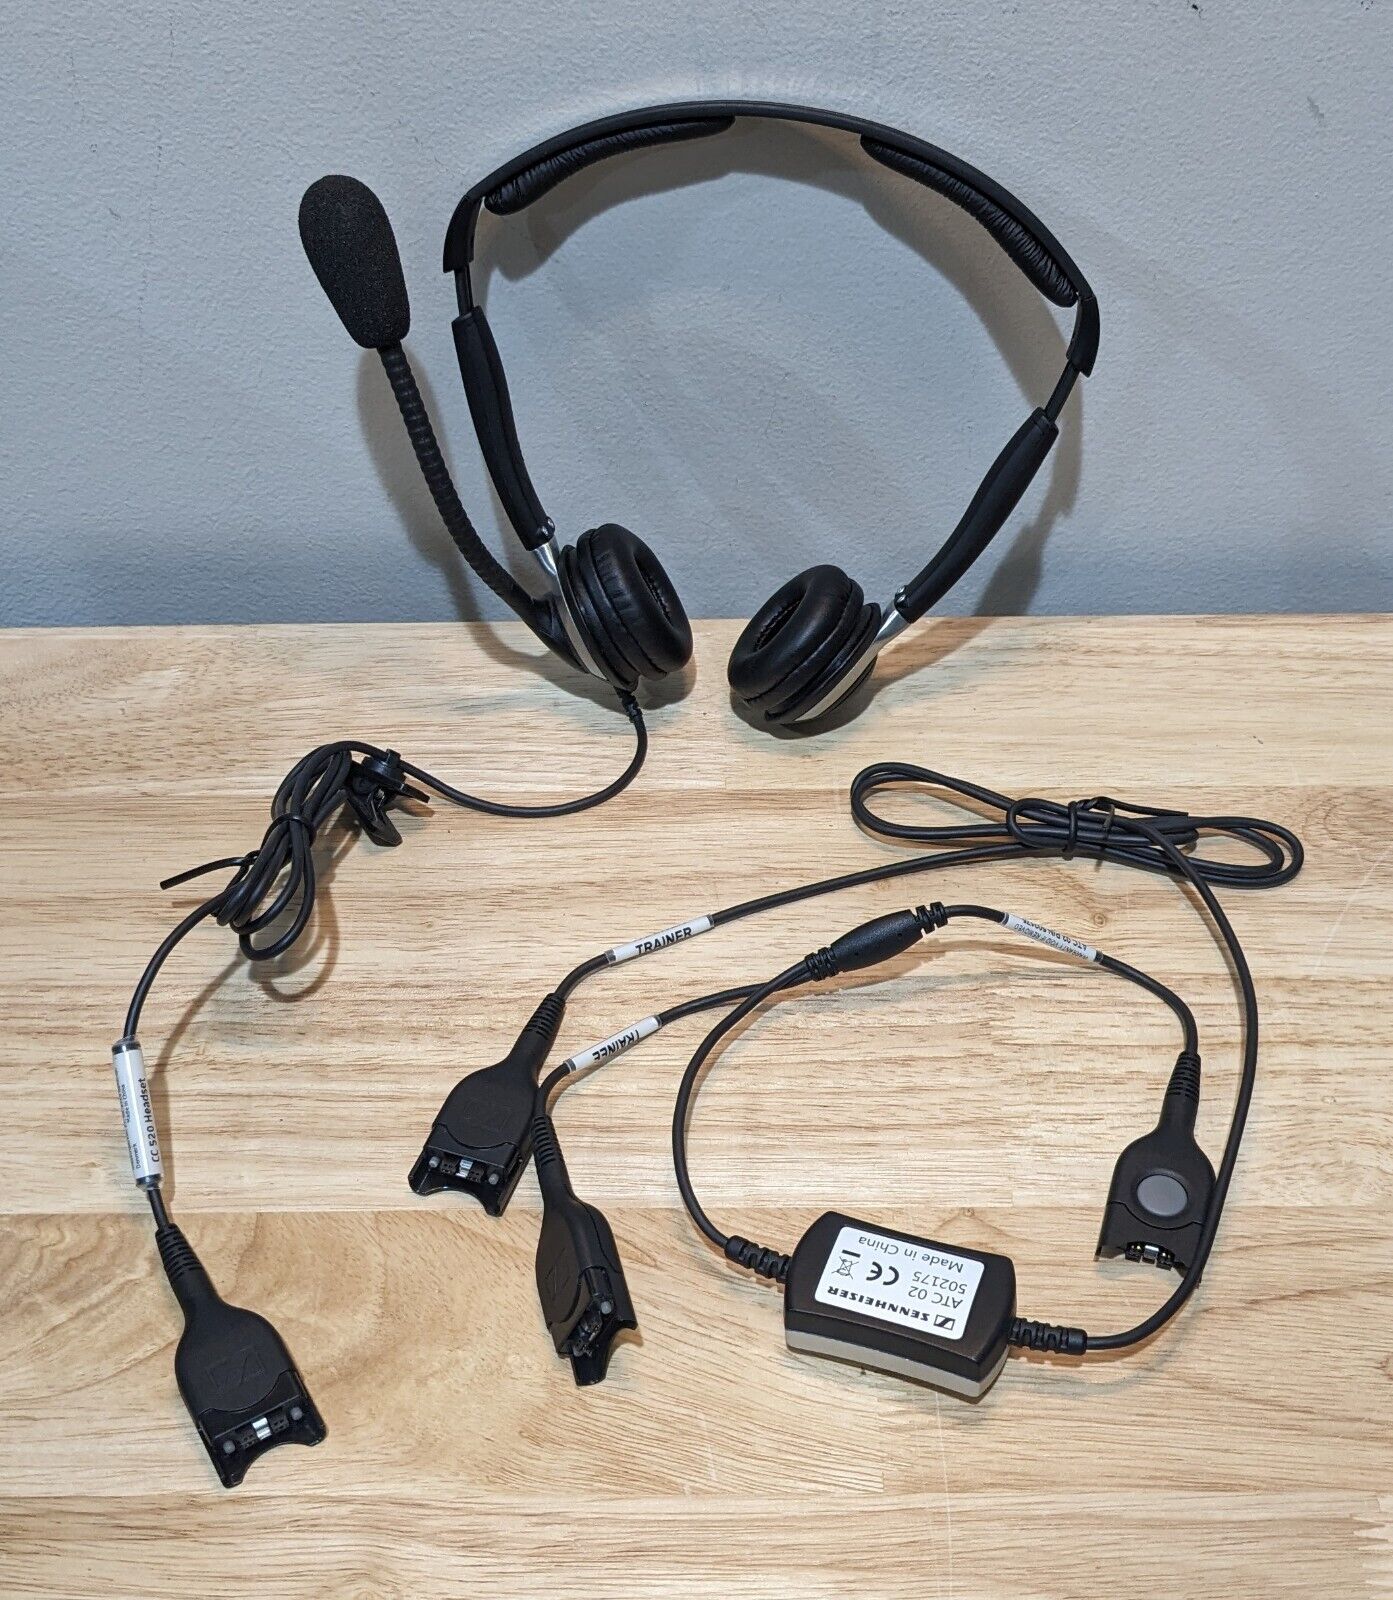 NEW Sennheiser CC520 IP Duo Corded Binaural Office Over-The-Head Headset